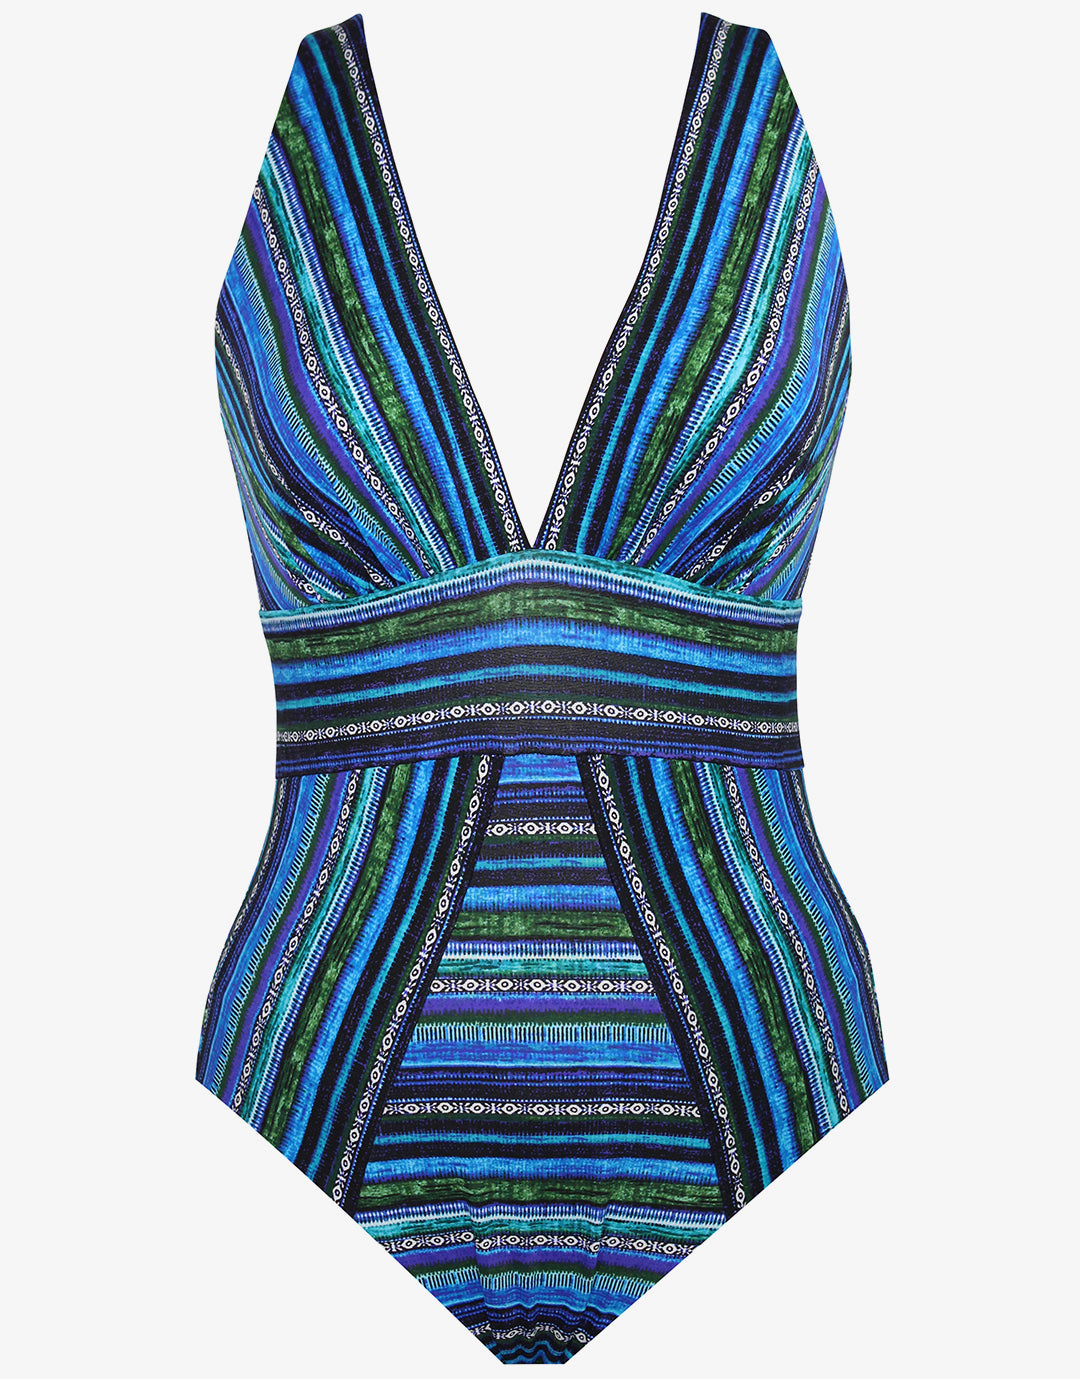 Veranda Odyssey Swimsuit - Blue - Simply Beach UK